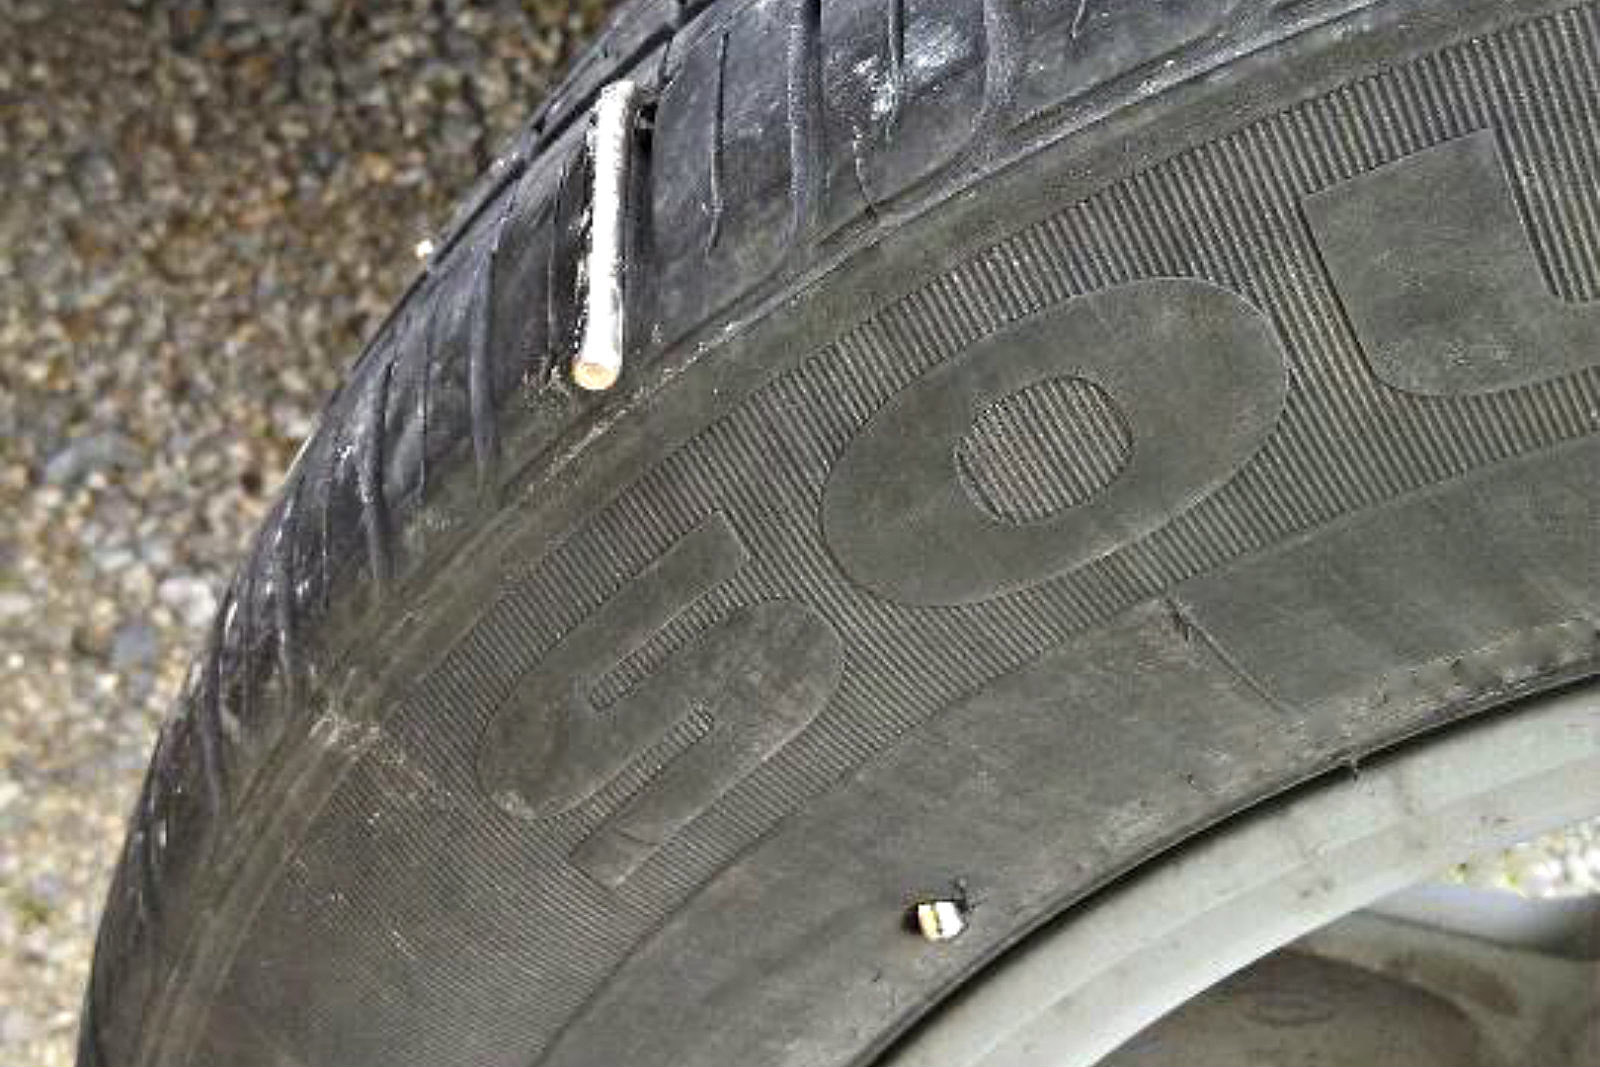 where can i fix my flat tire near ripon wisconsin